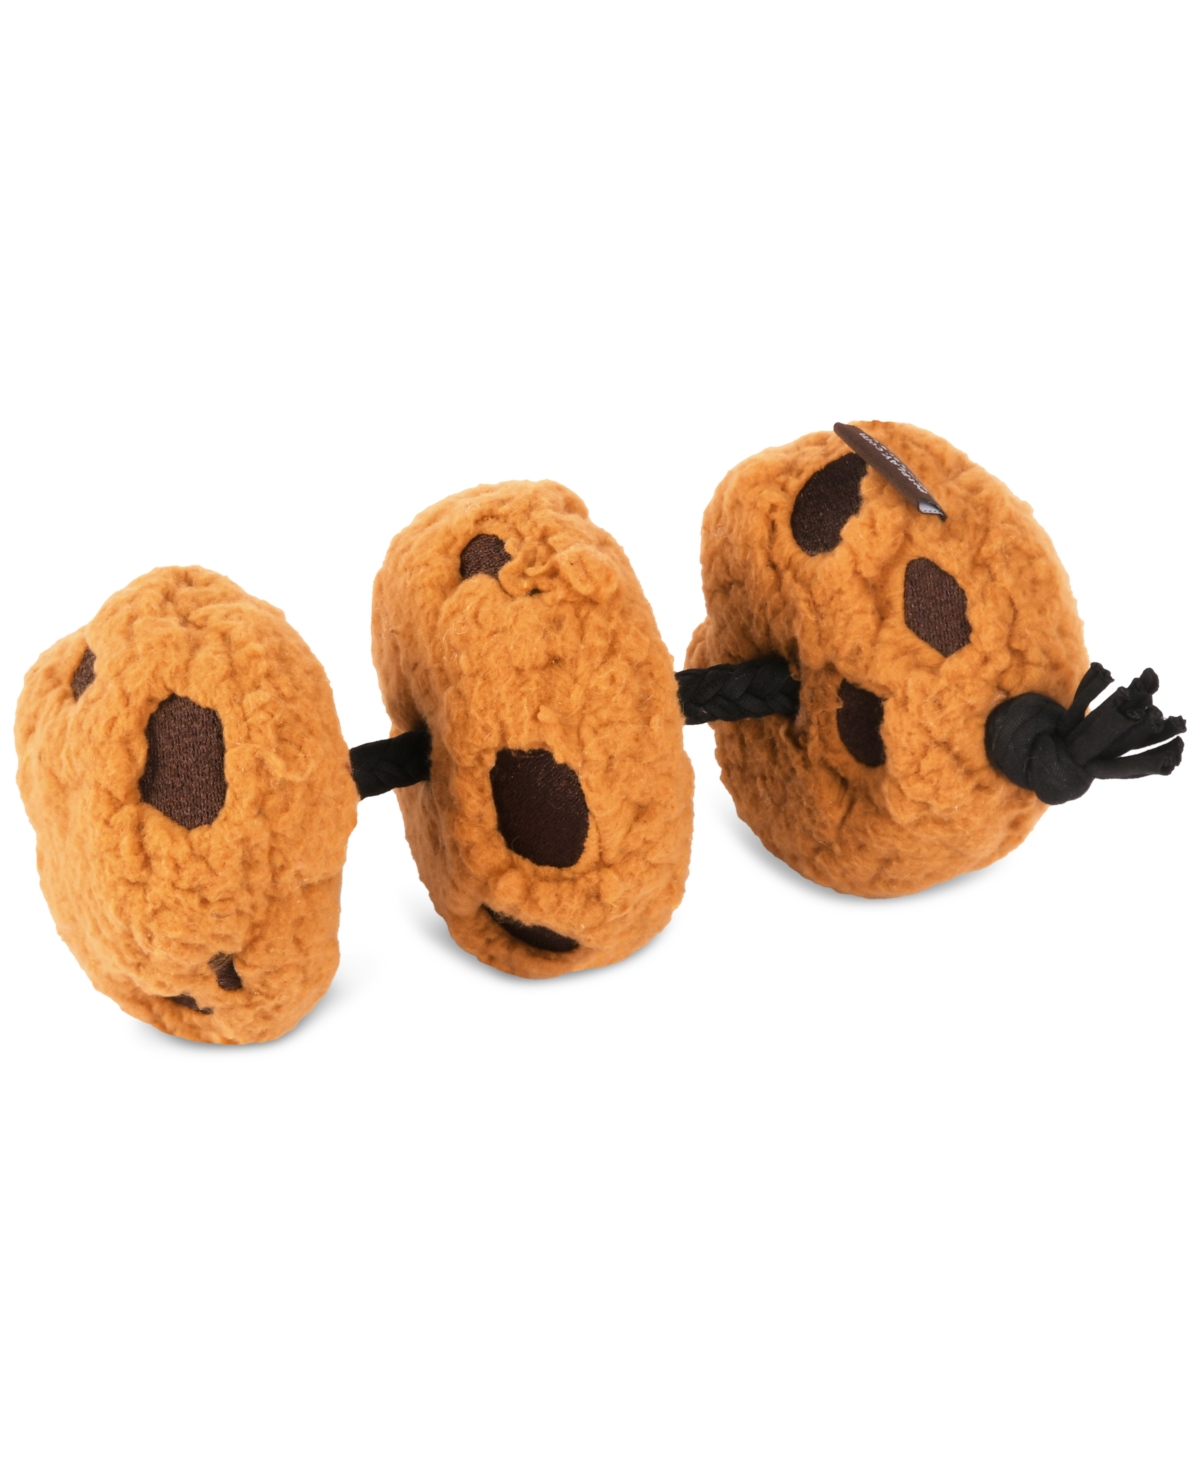 Cookies n' Treats Plush Dog Toy - Brown